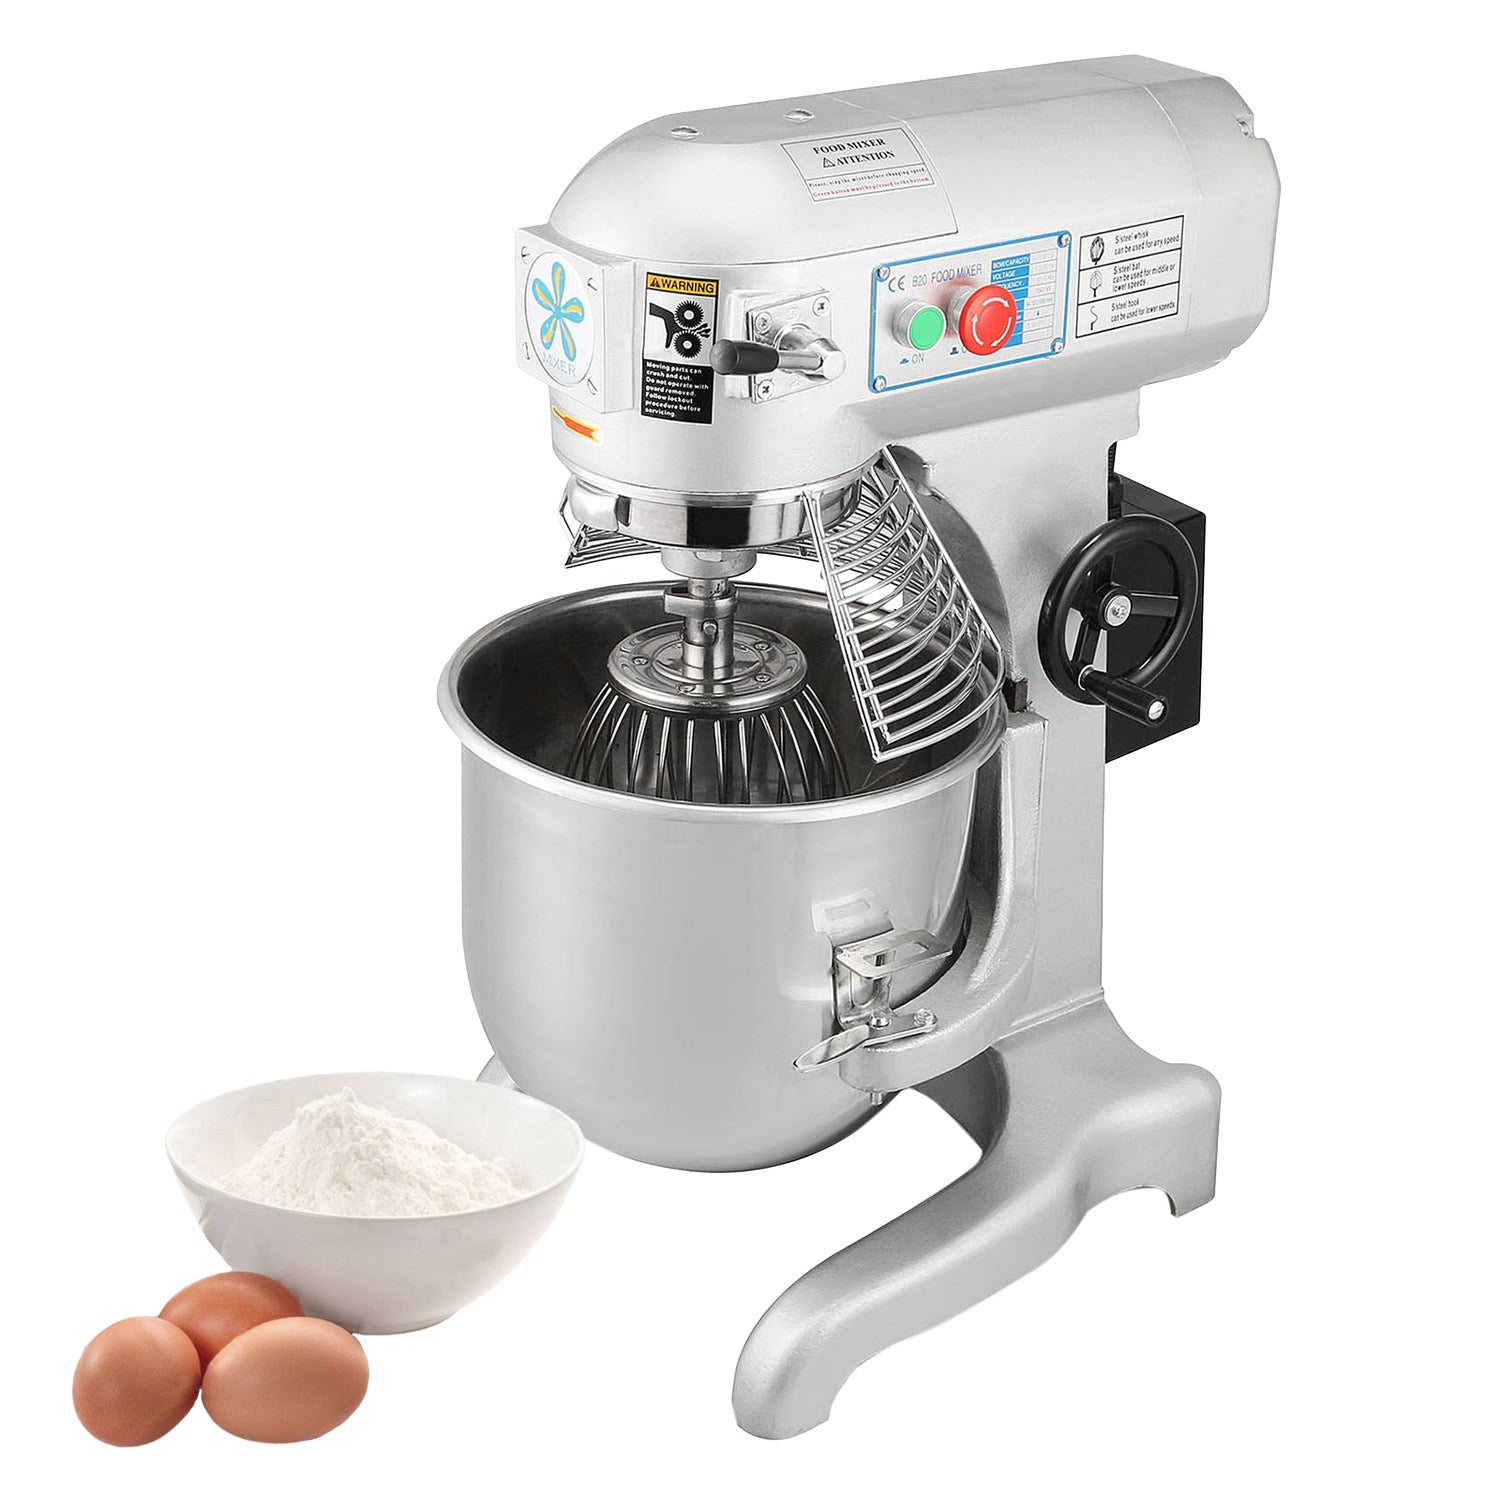  Hakka Commercial Dough Mixer, 30 Qt Rising Spiral